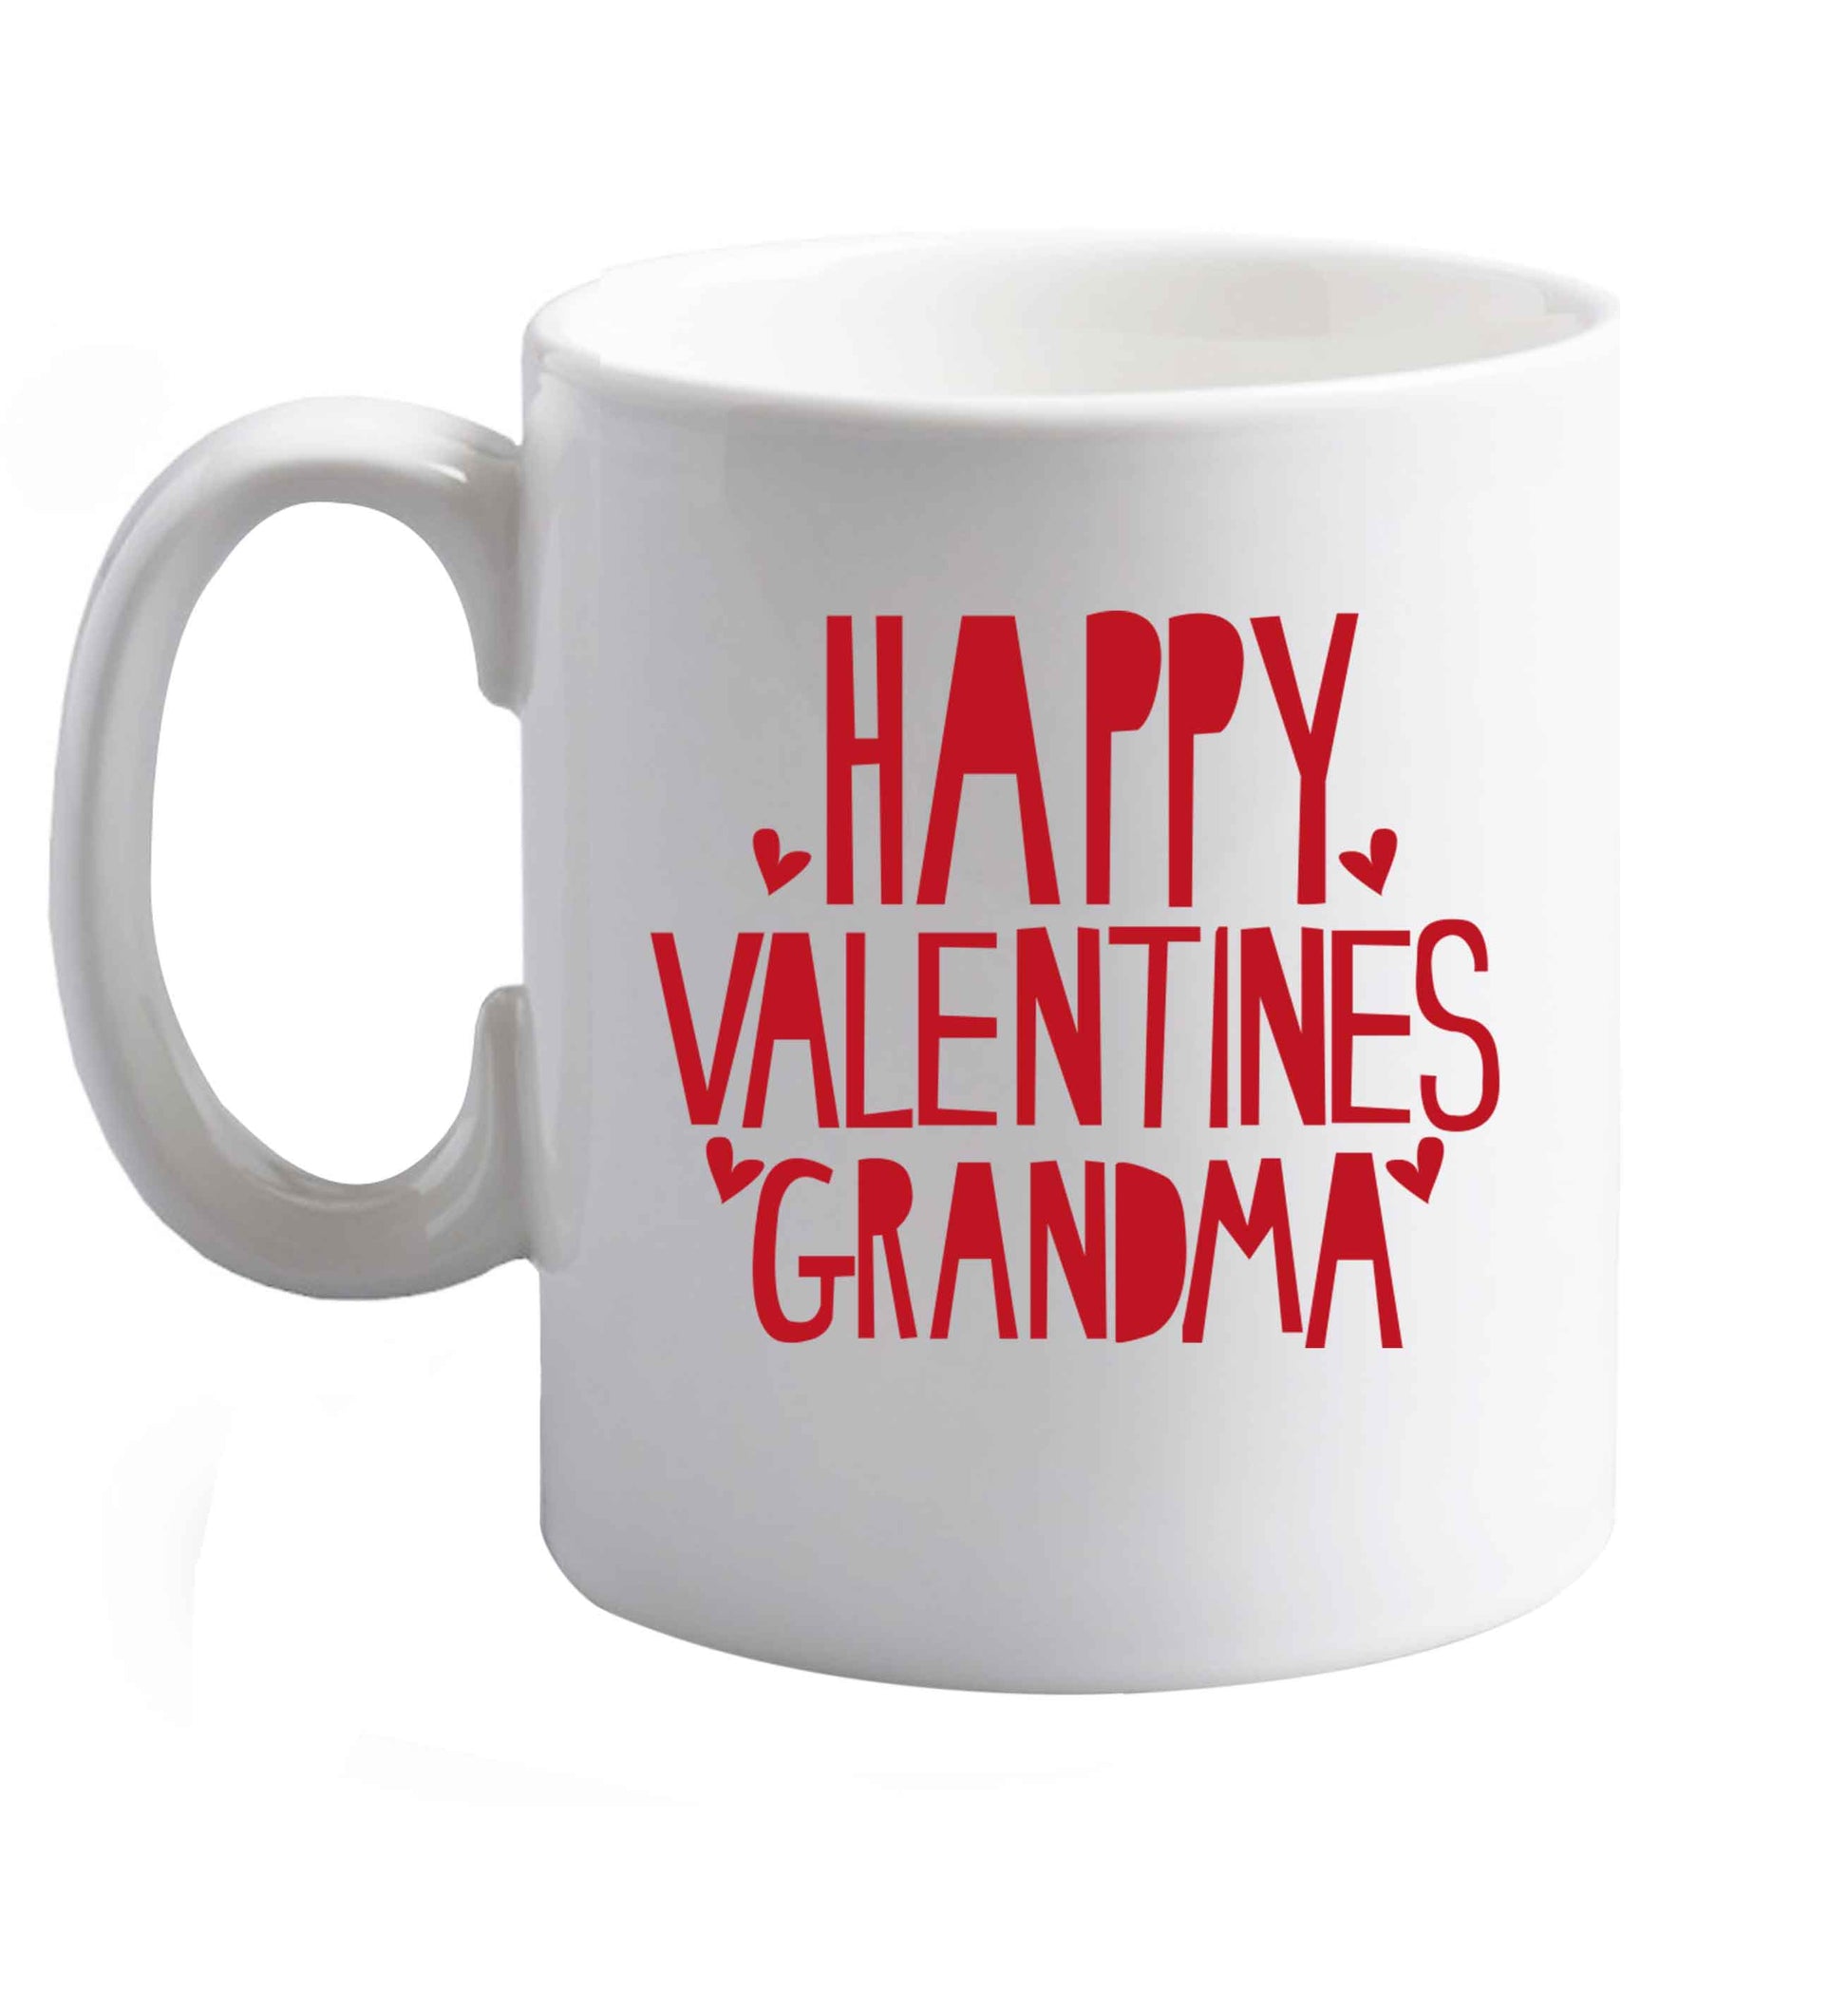 10 oz Happy valentines grandma ceramic mug right handed